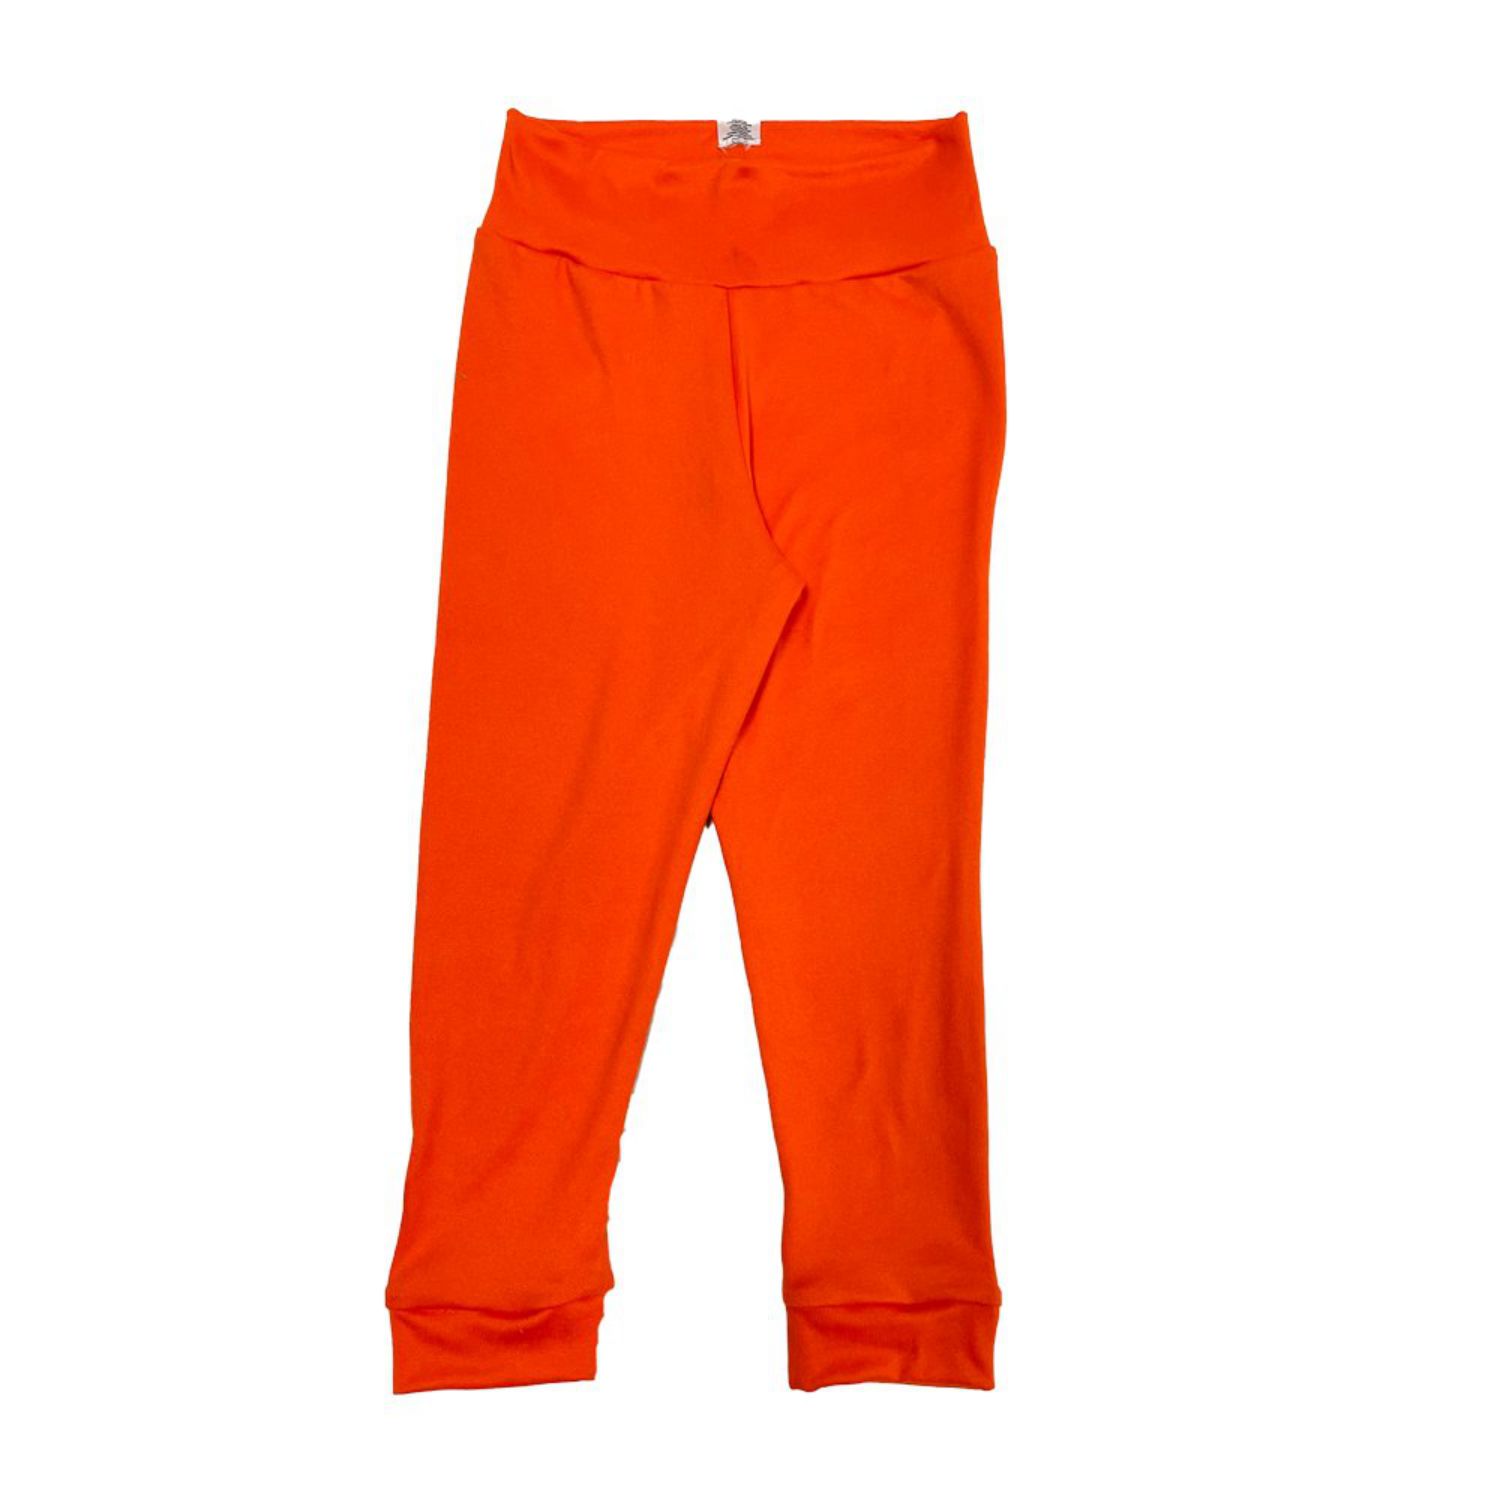 Bumblito Leggings Größe: M (74 - 98) / Muster: Orange